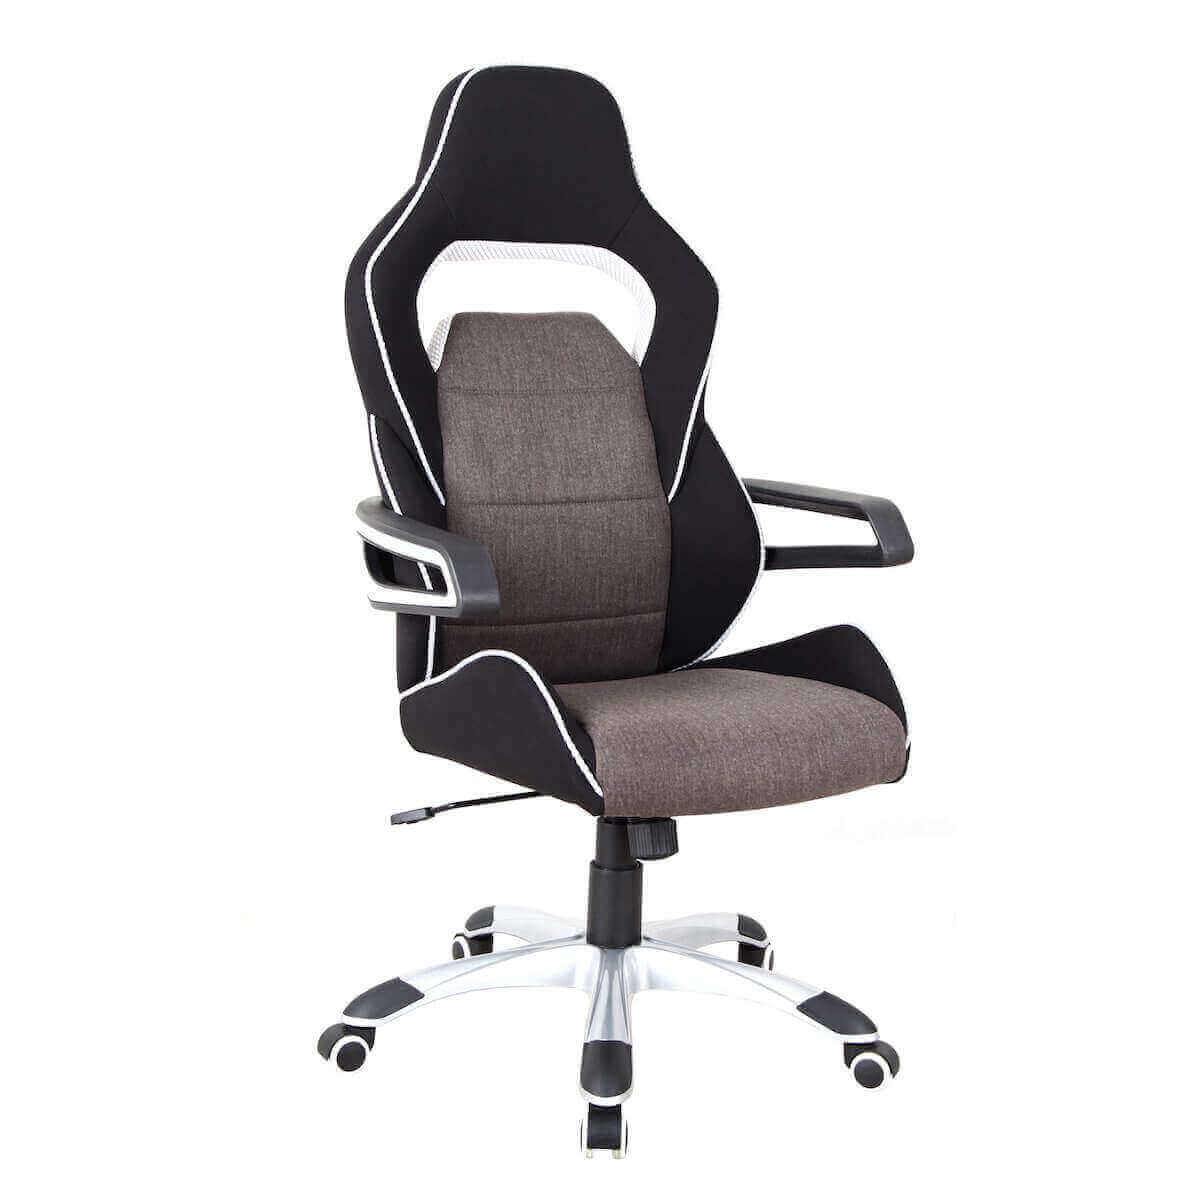 Techni Mobili Gray/Black Ergonomic Upholstered Racing Style Home & Office Chair RTA-2017-GRY Angle